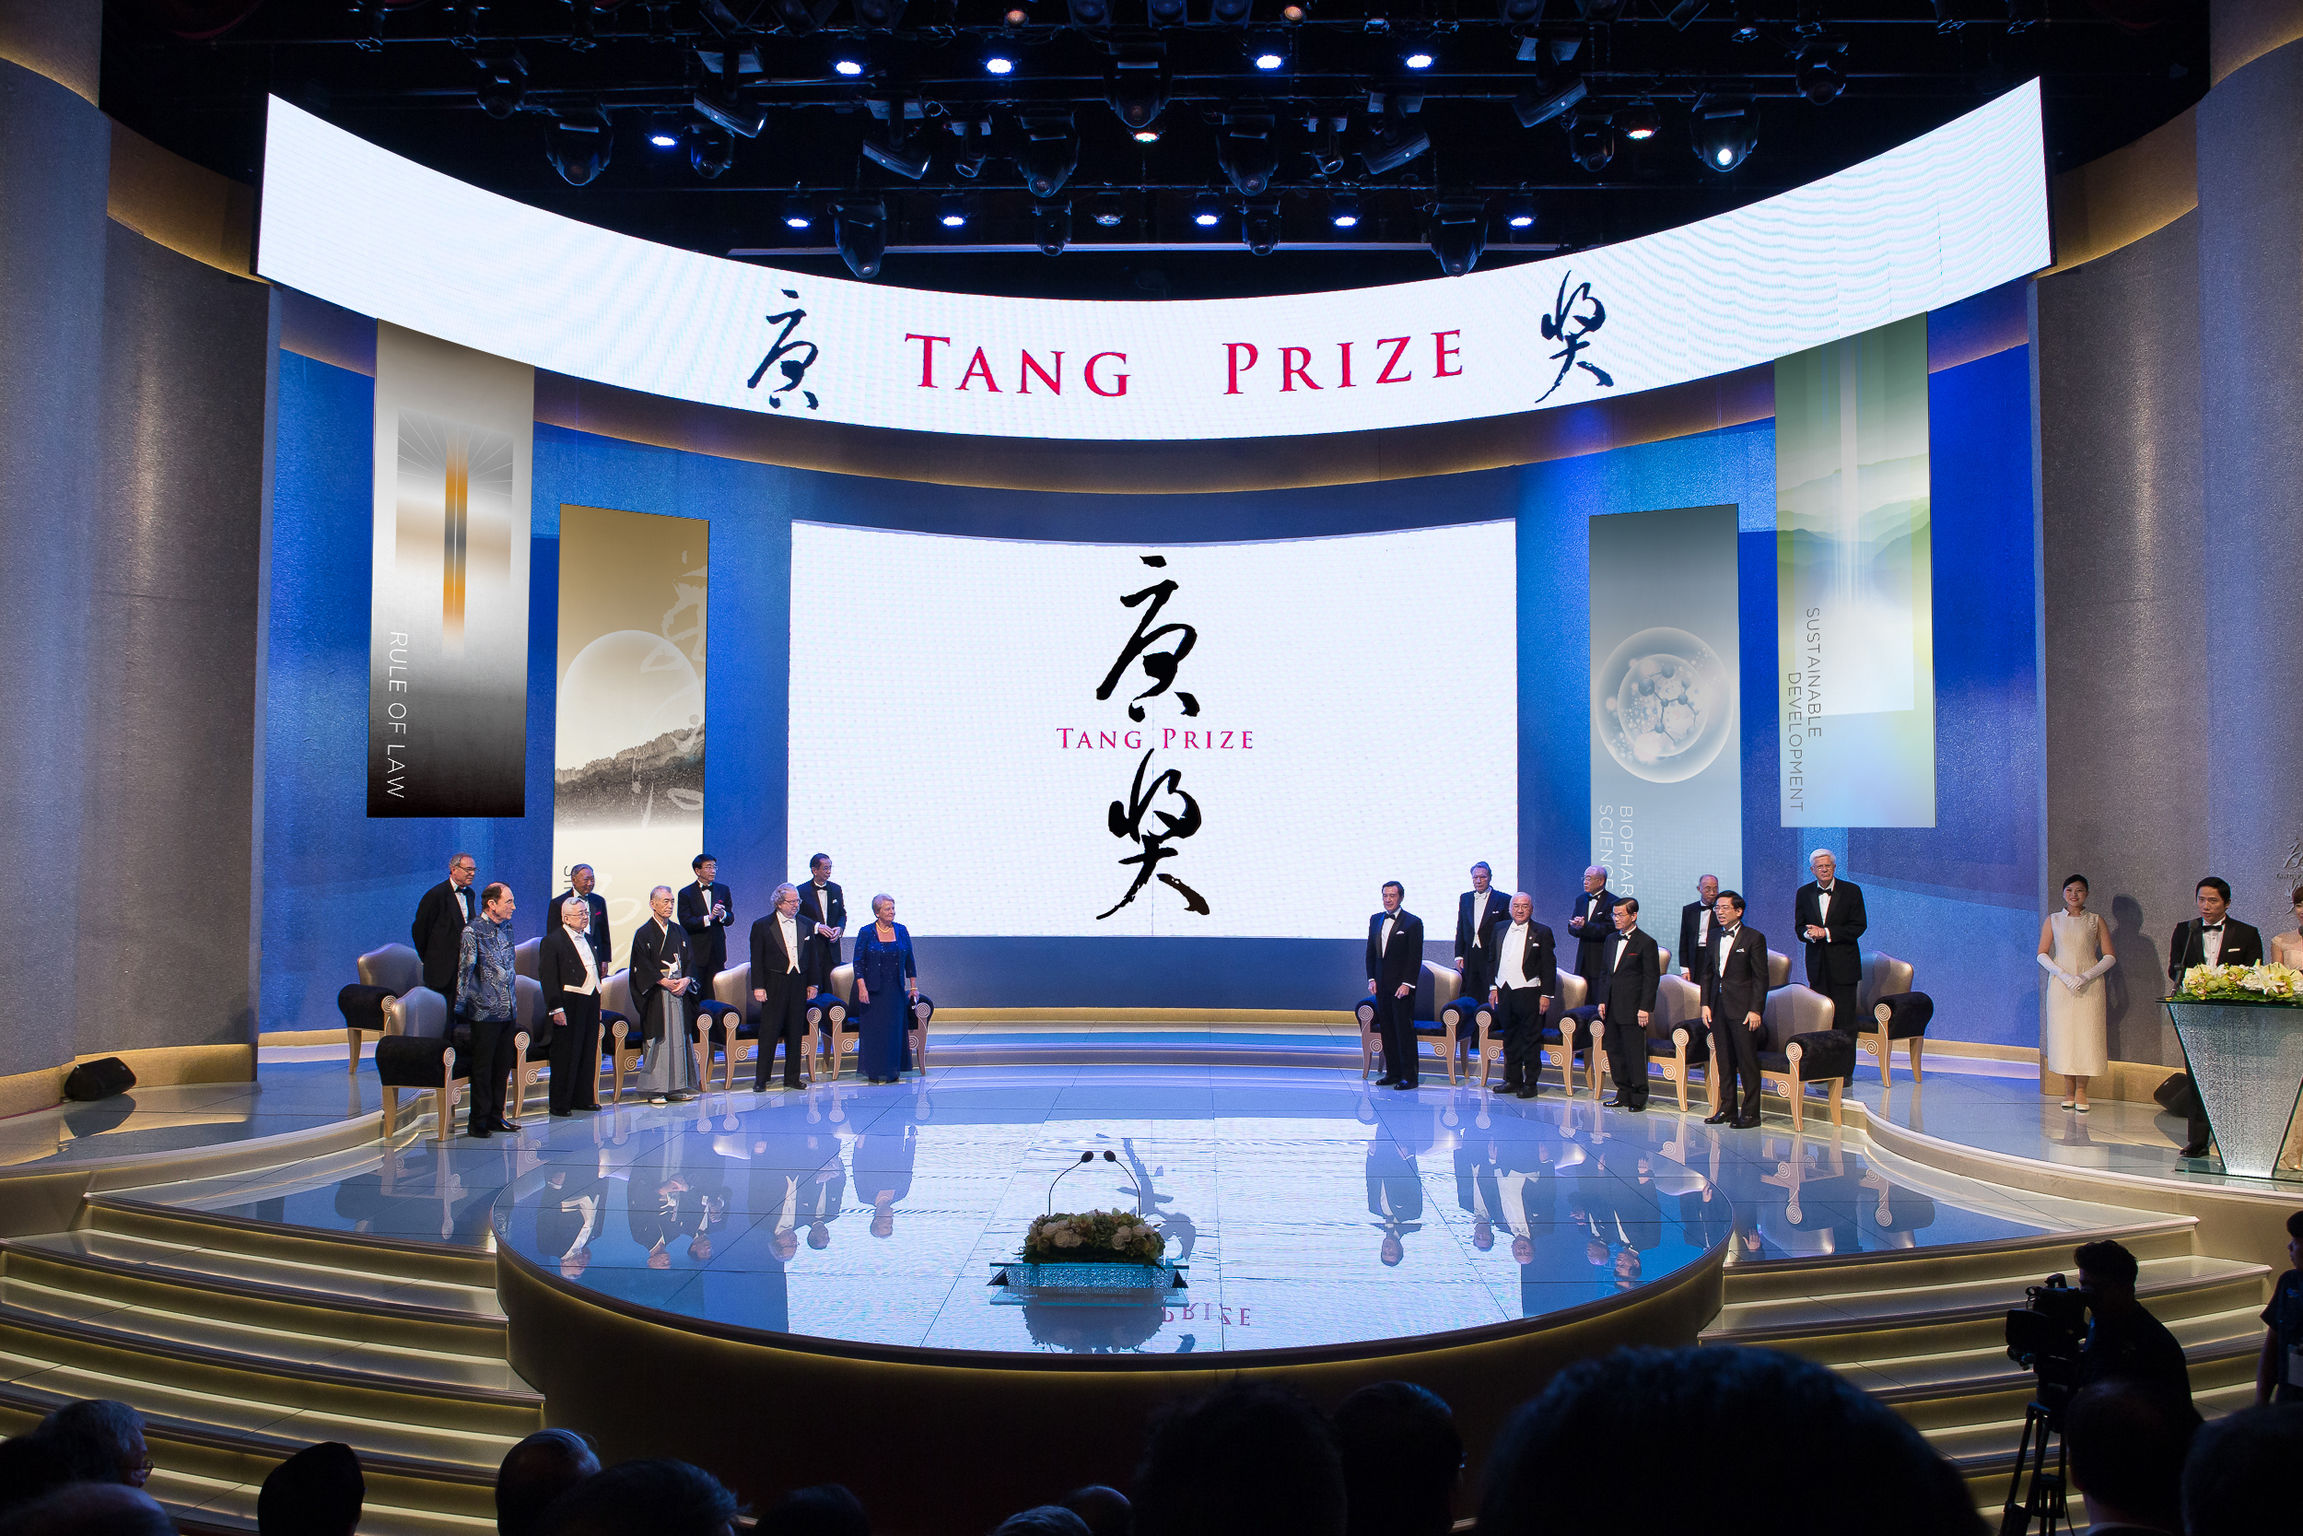 Tang Prize Image Scroll